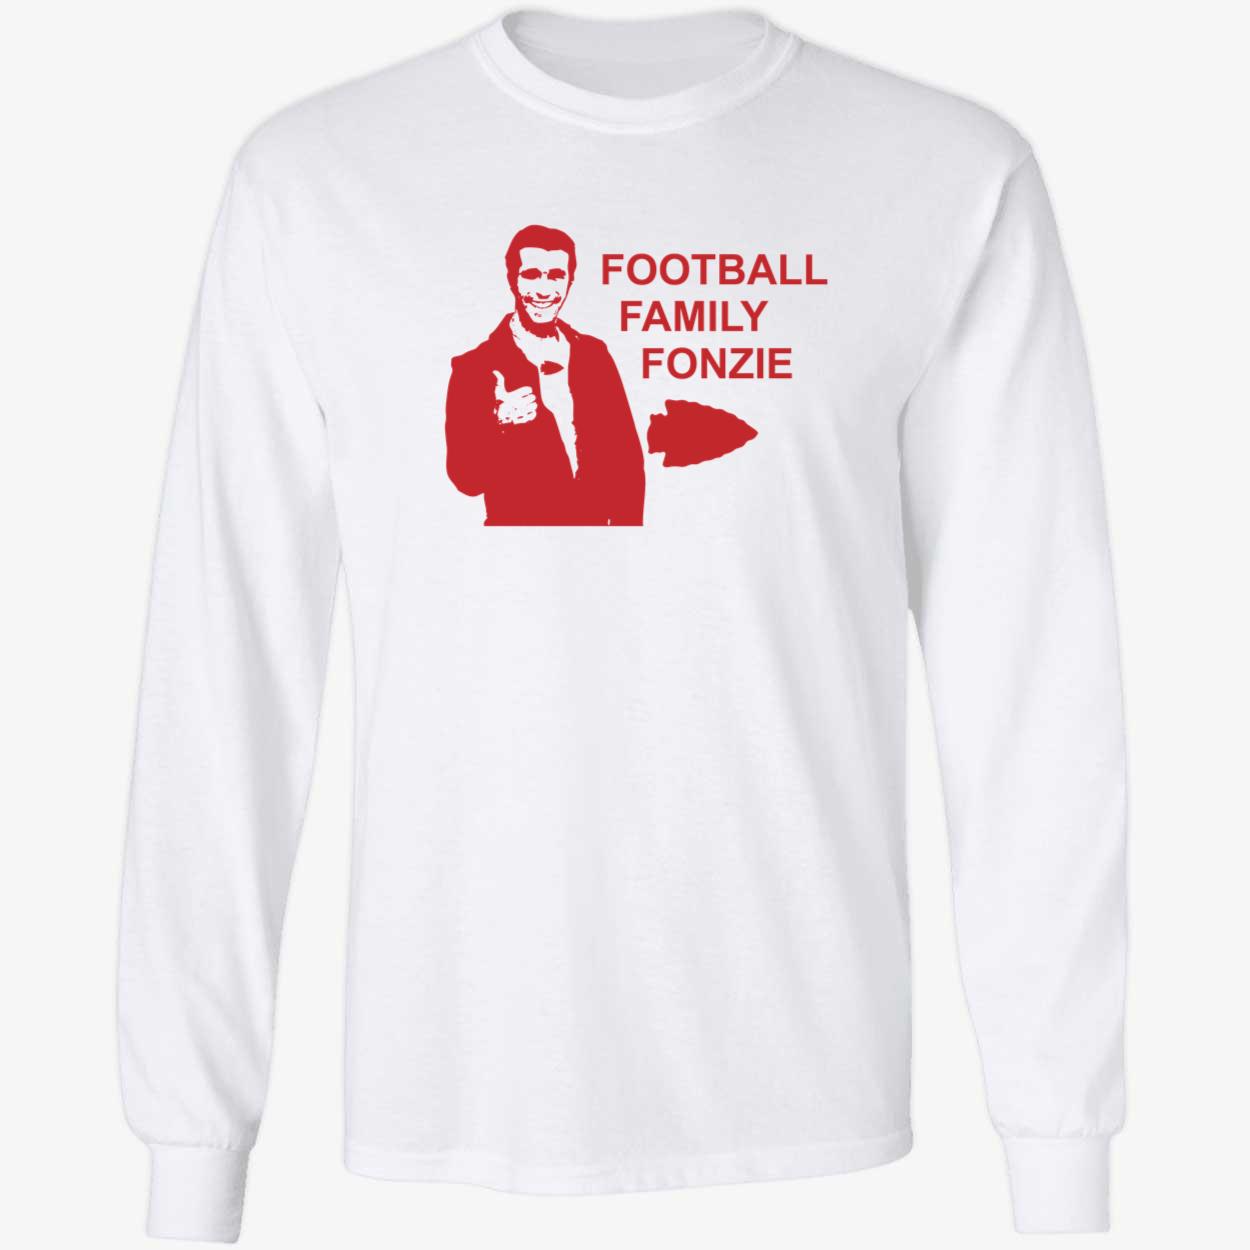 aaronladd0 Football Family Fonzie Long Sleeve Shirt